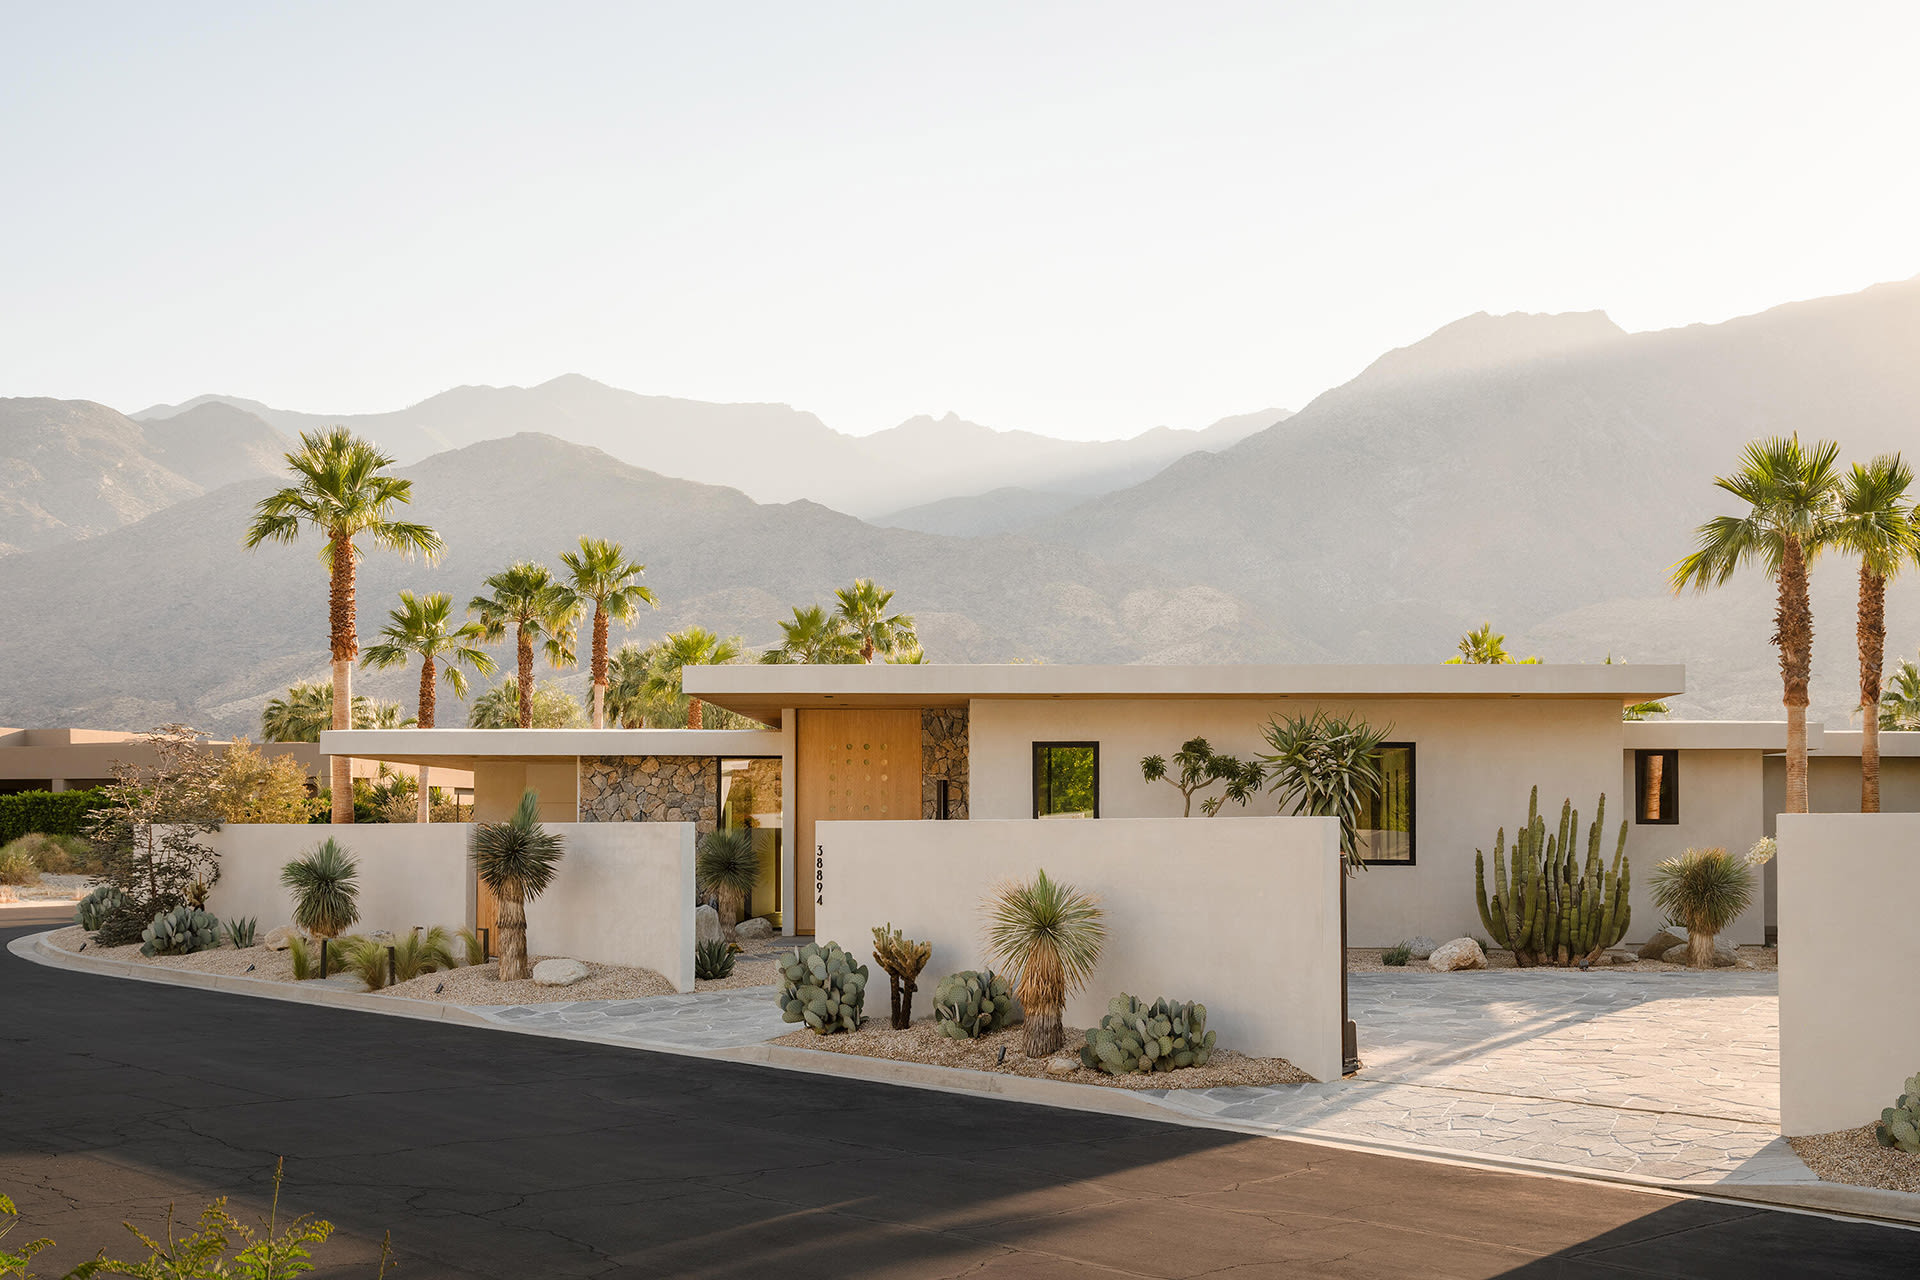 The Trinidad Circle House: A Modern Desert Retreat in Palm Springs